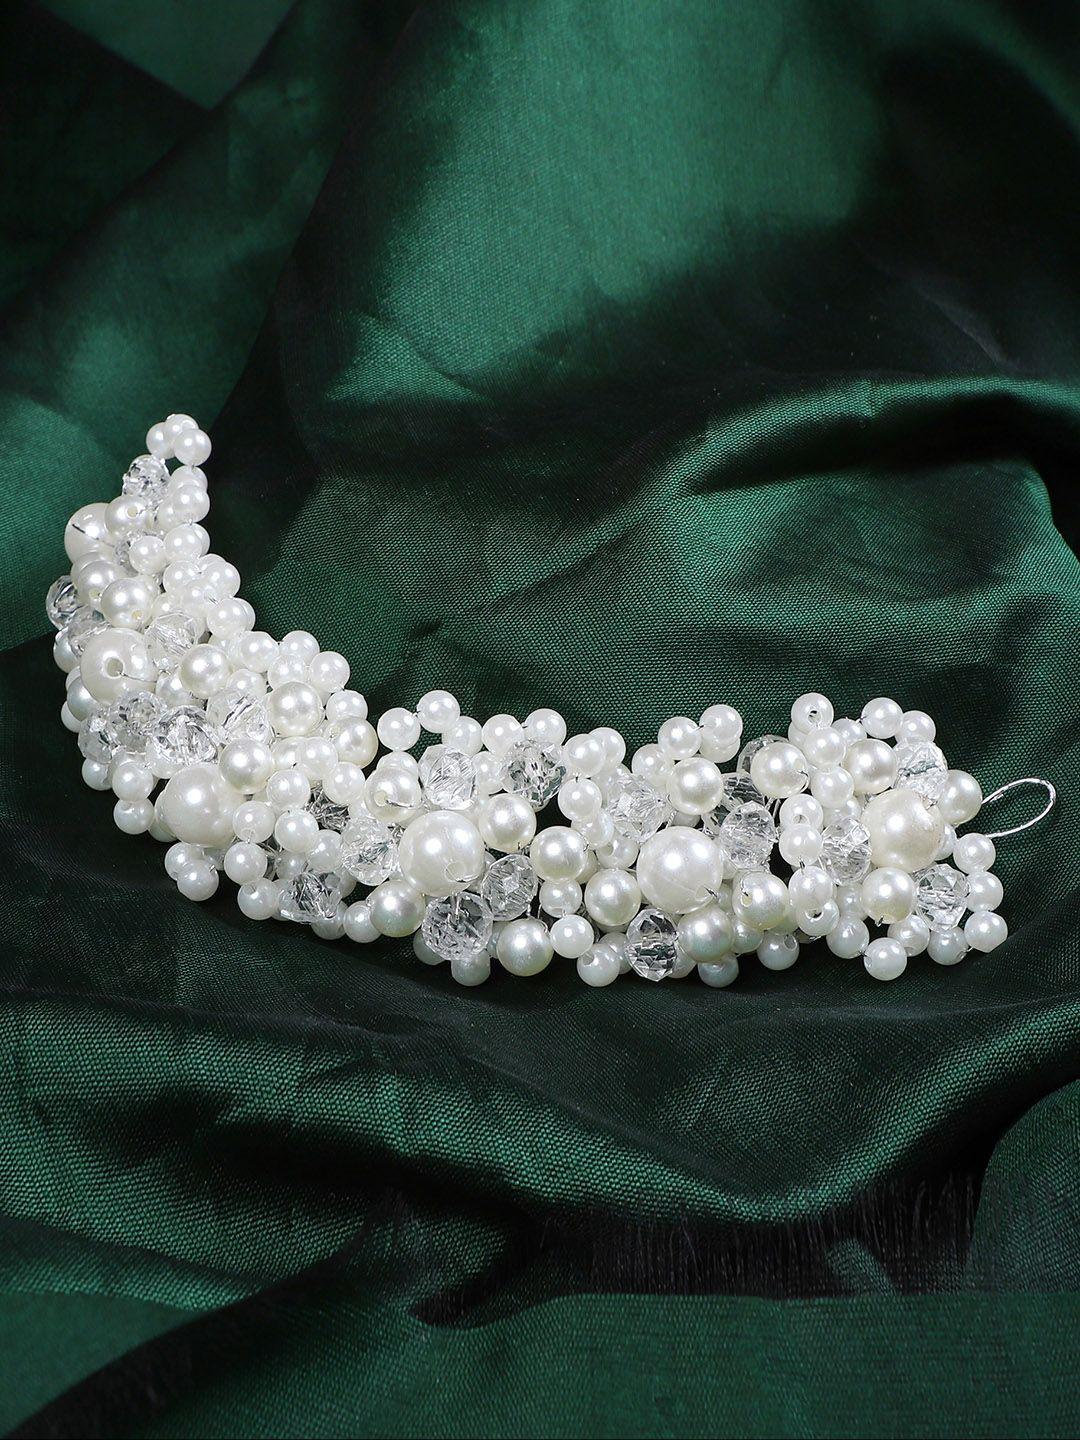 aquastreet white pearls hair accessory